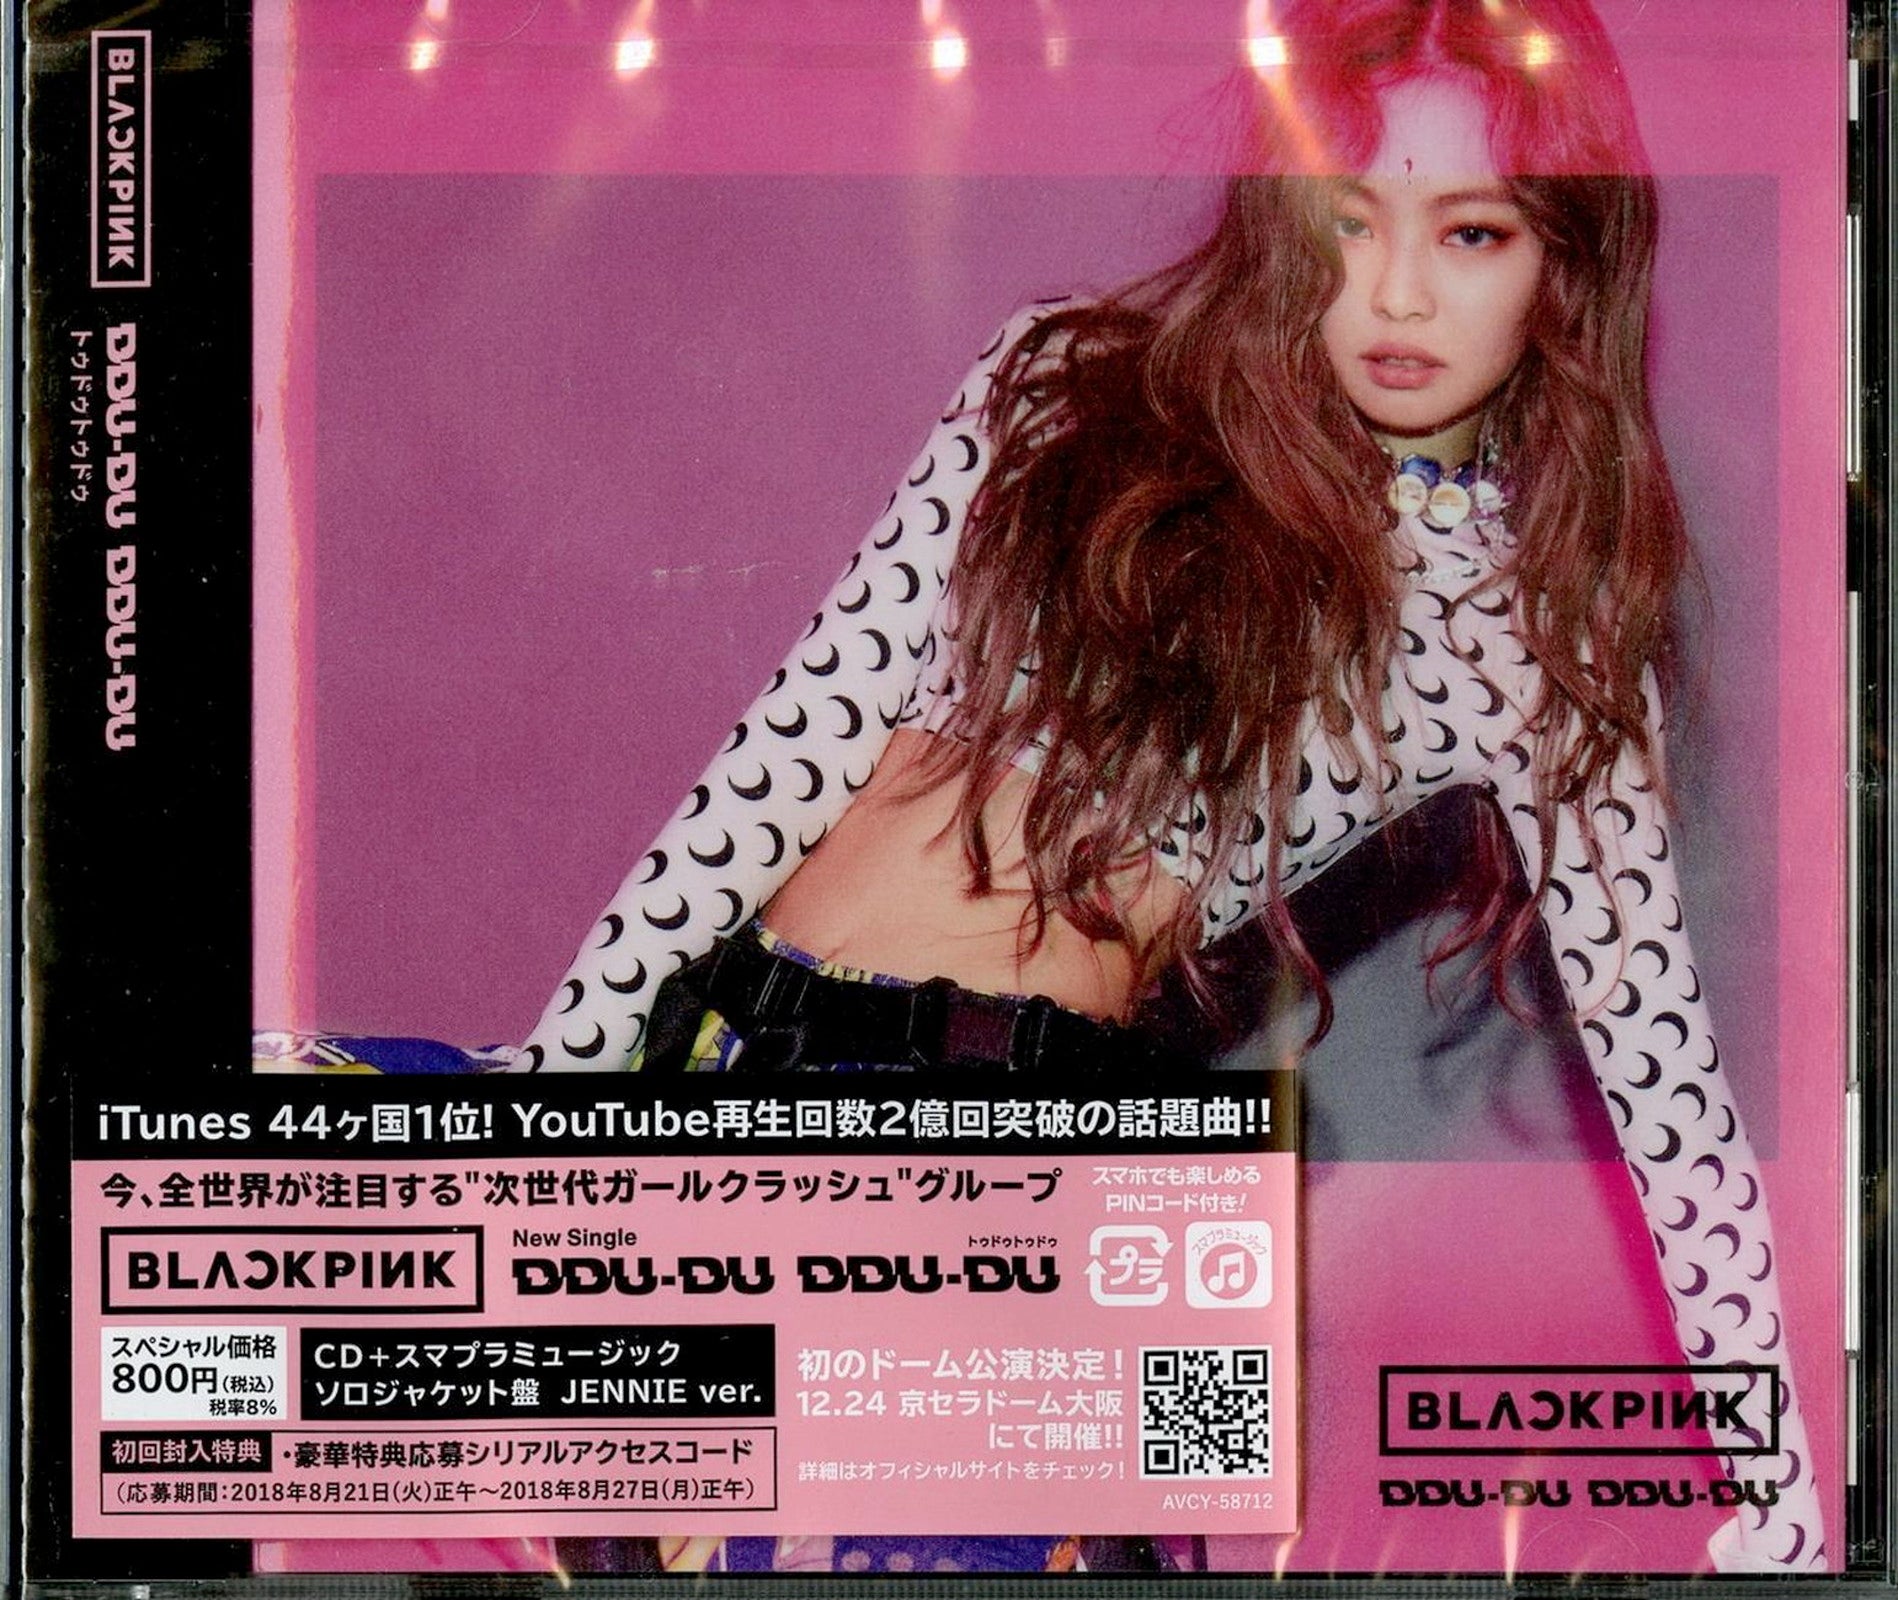 Blackpink DDU-DU DDU-DU (Jennie Ver.) Japan CD CDs Vinyl Japan Store